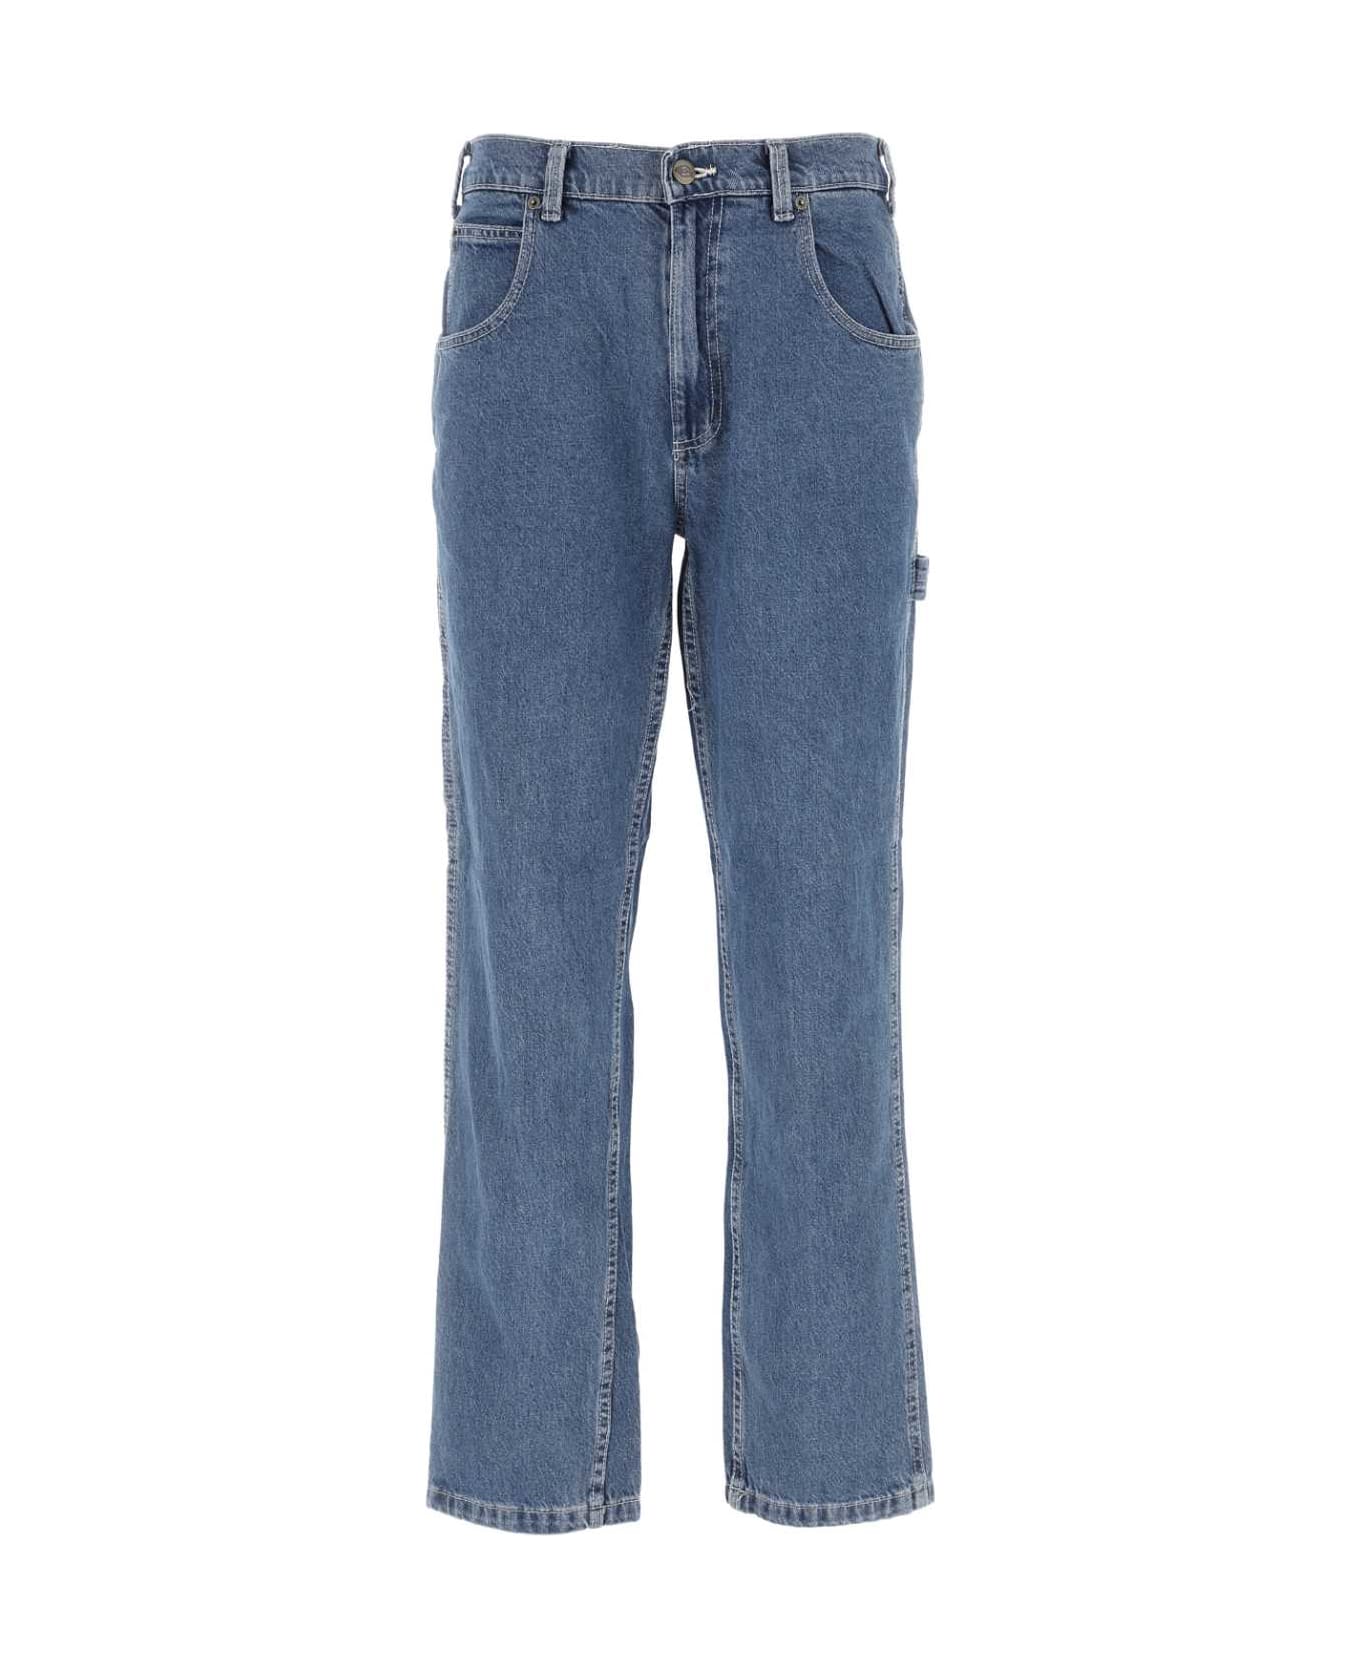 Dickies Denim Jeans - CLASSICBLUE